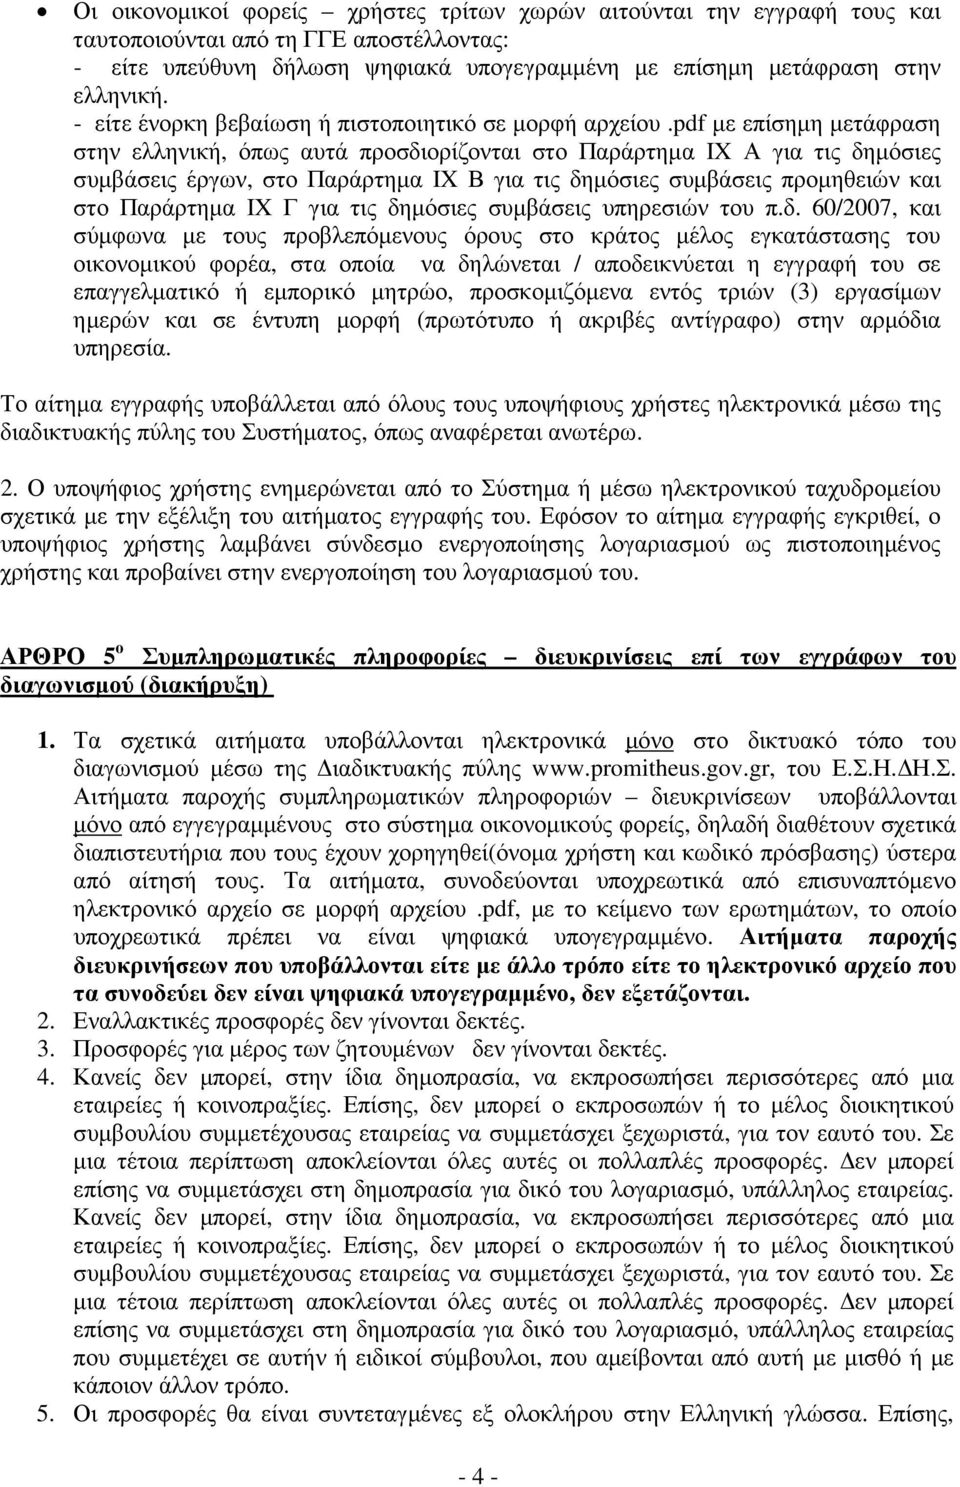 pdf µε επίσηµη µετάφραση στην ελληνική, όπως αυτά προσδιορίζονται στο Παράρτηµα IX Α για τις δηµόσιες συµβάσεις έργων, στο Παράρτηµα IX Β για τις δηµόσιες συµβάσεις προµηθειών και στο Παράρτηµα IX Γ